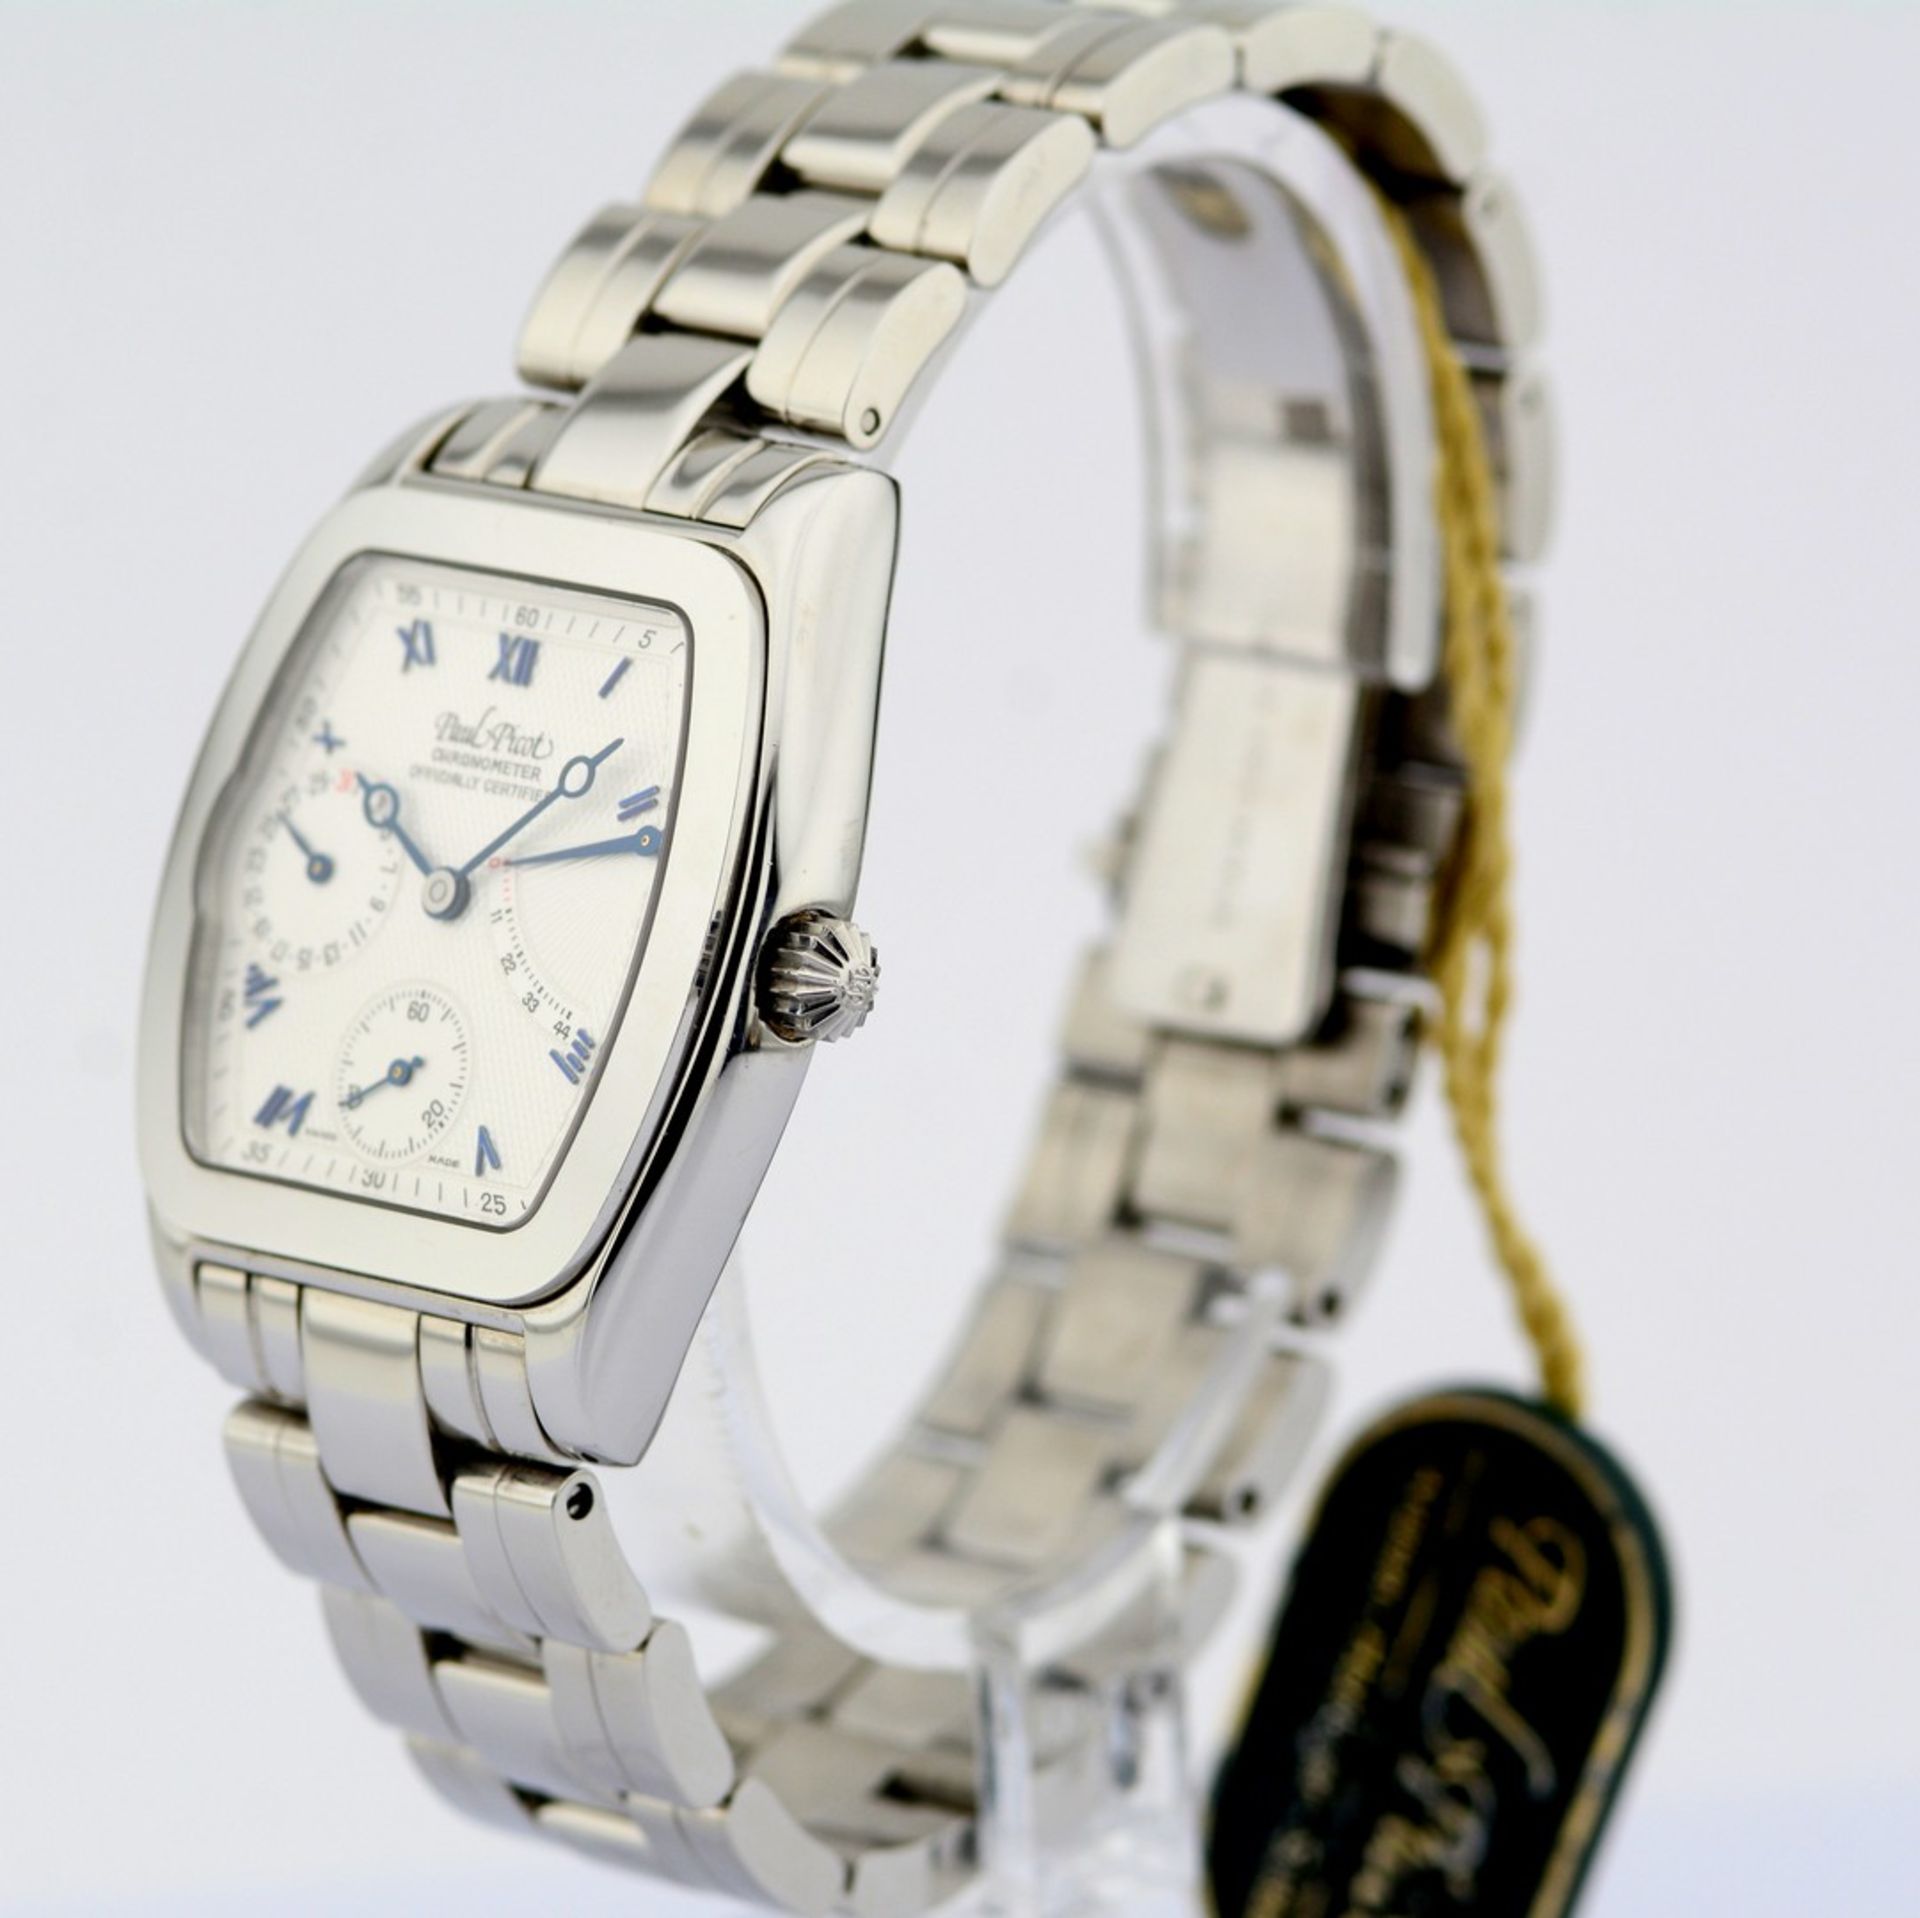 Paul Picot / Firshire Chronometer Reserve (NEW) - Gentlmen's Steel Wrist Watch - Image 3 of 6